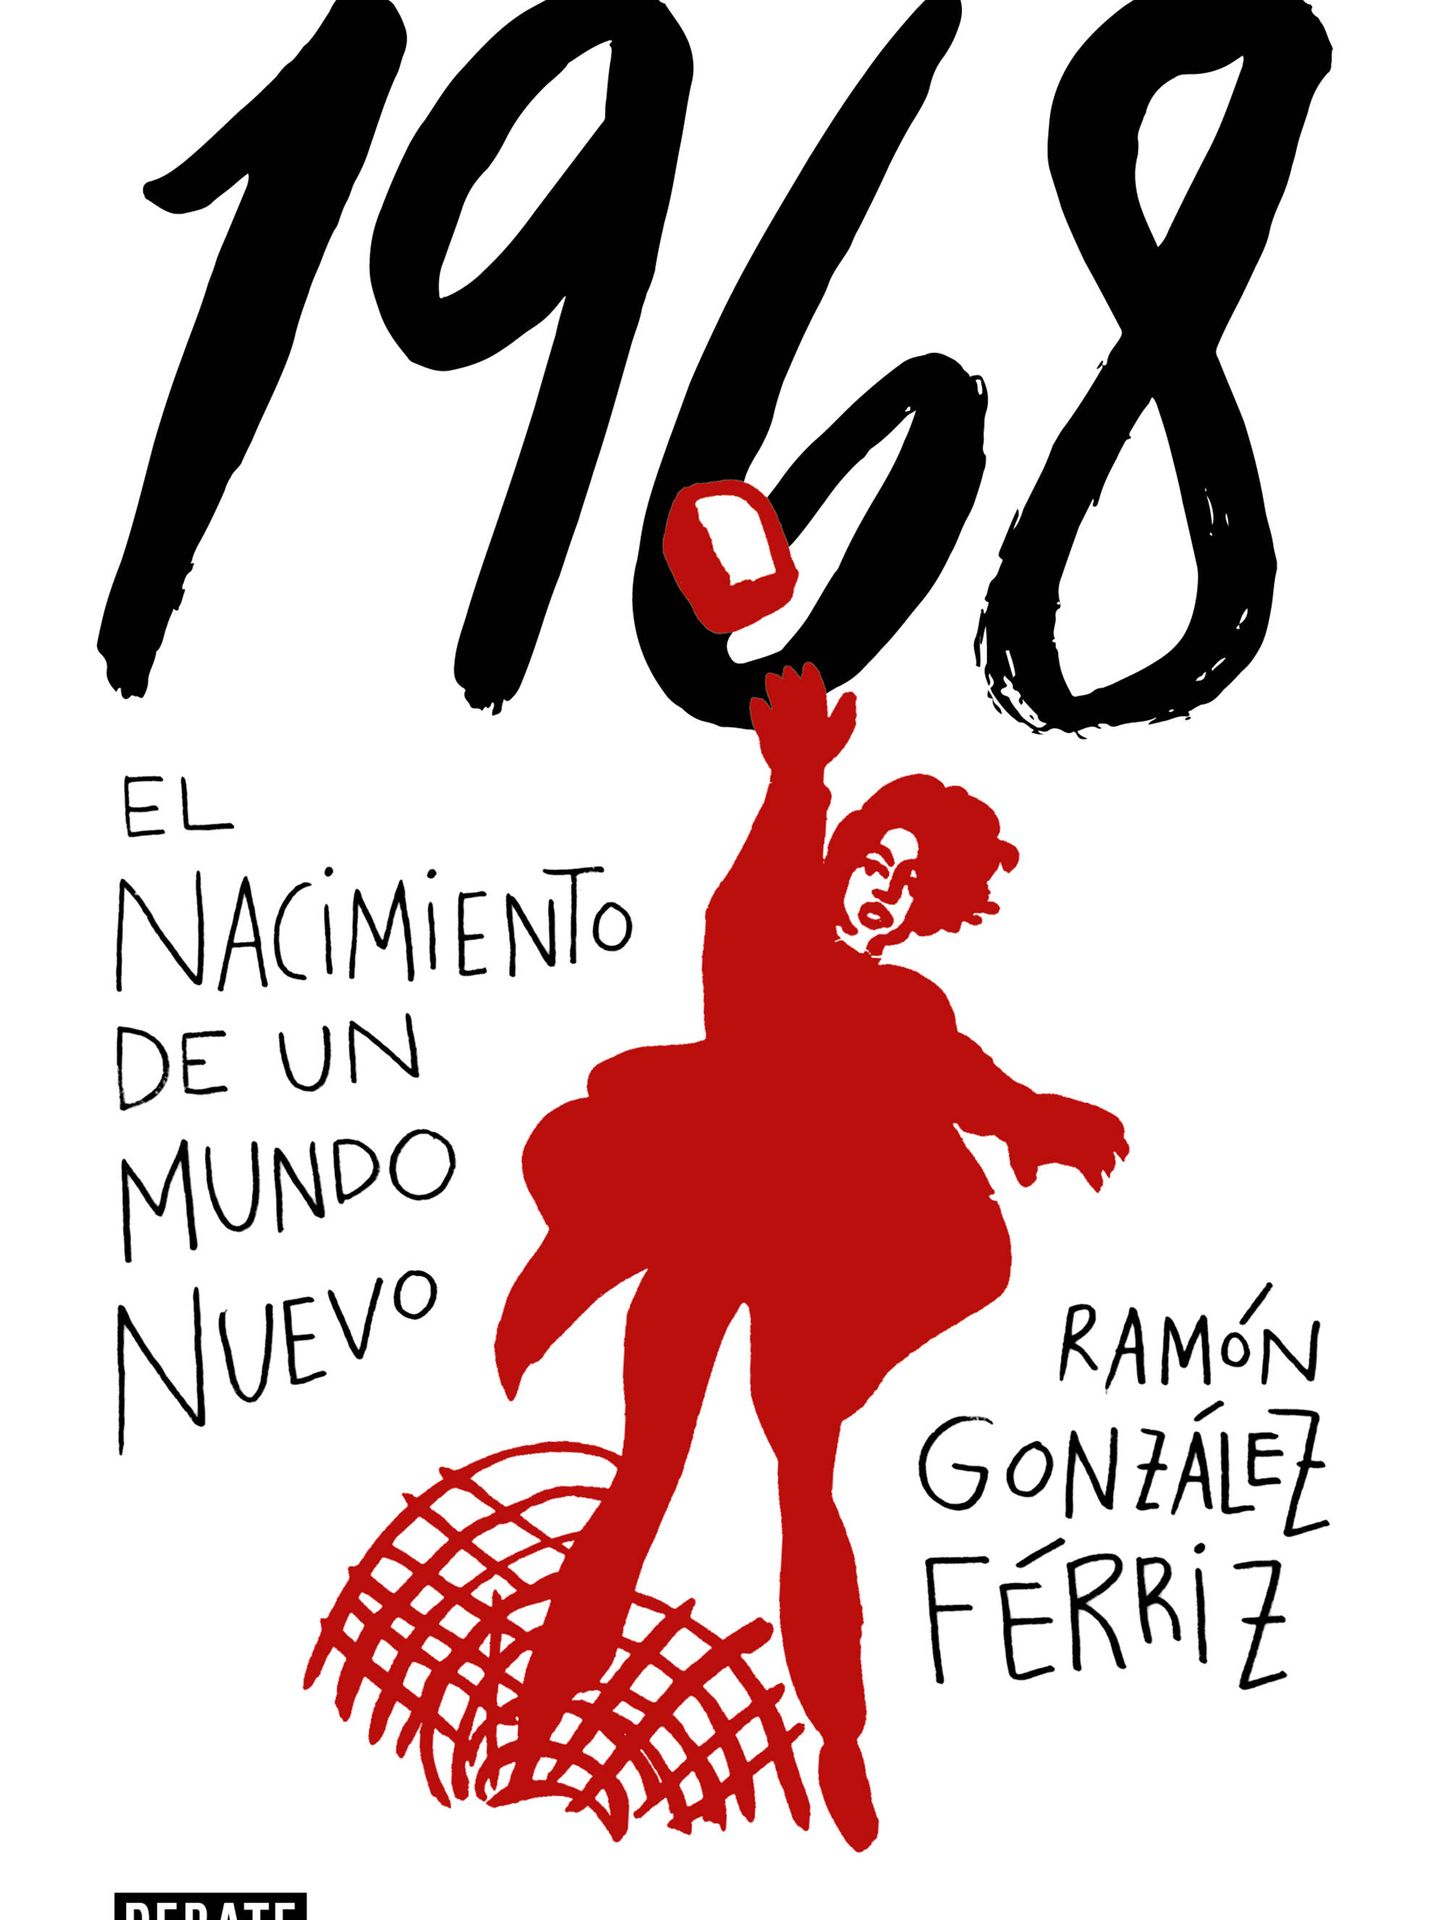 '1968'.(Debate)